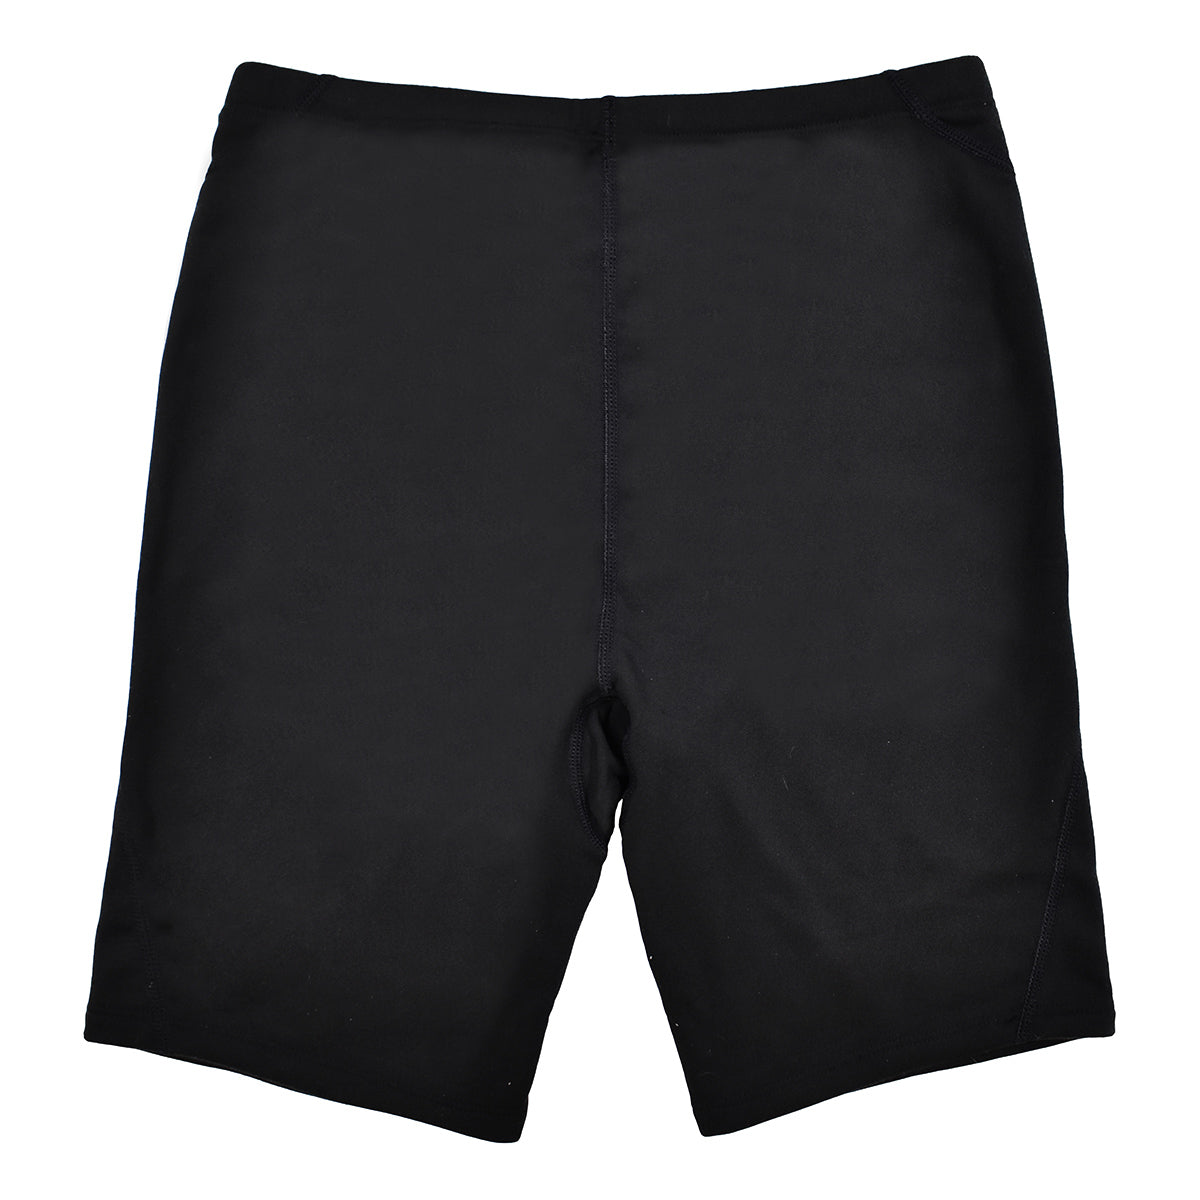 Thermaswim Adult Swim Shorts Unisex Thermal Base Layer Bottom